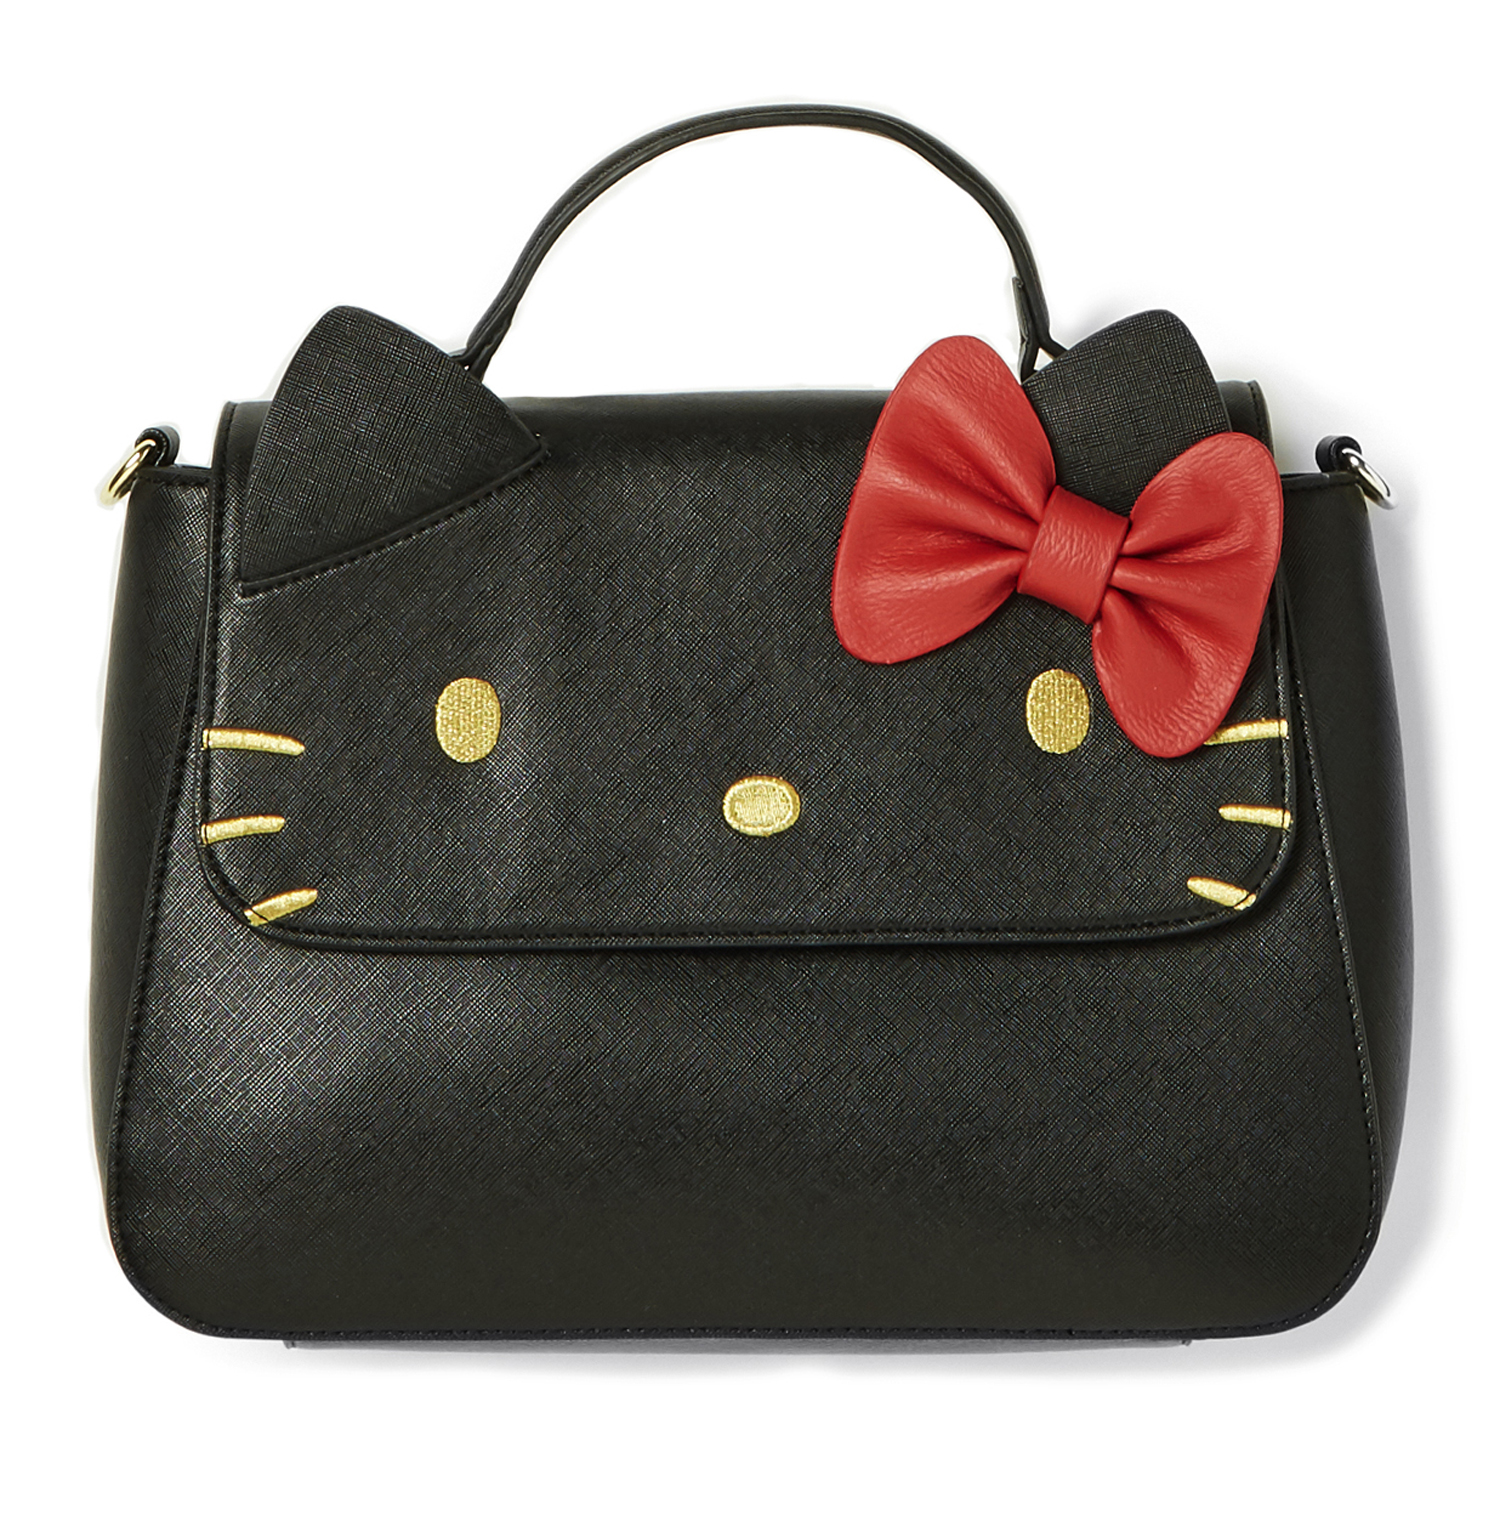 Modcloth-for-Hello-Kitty-Black-Crossbody-Bag